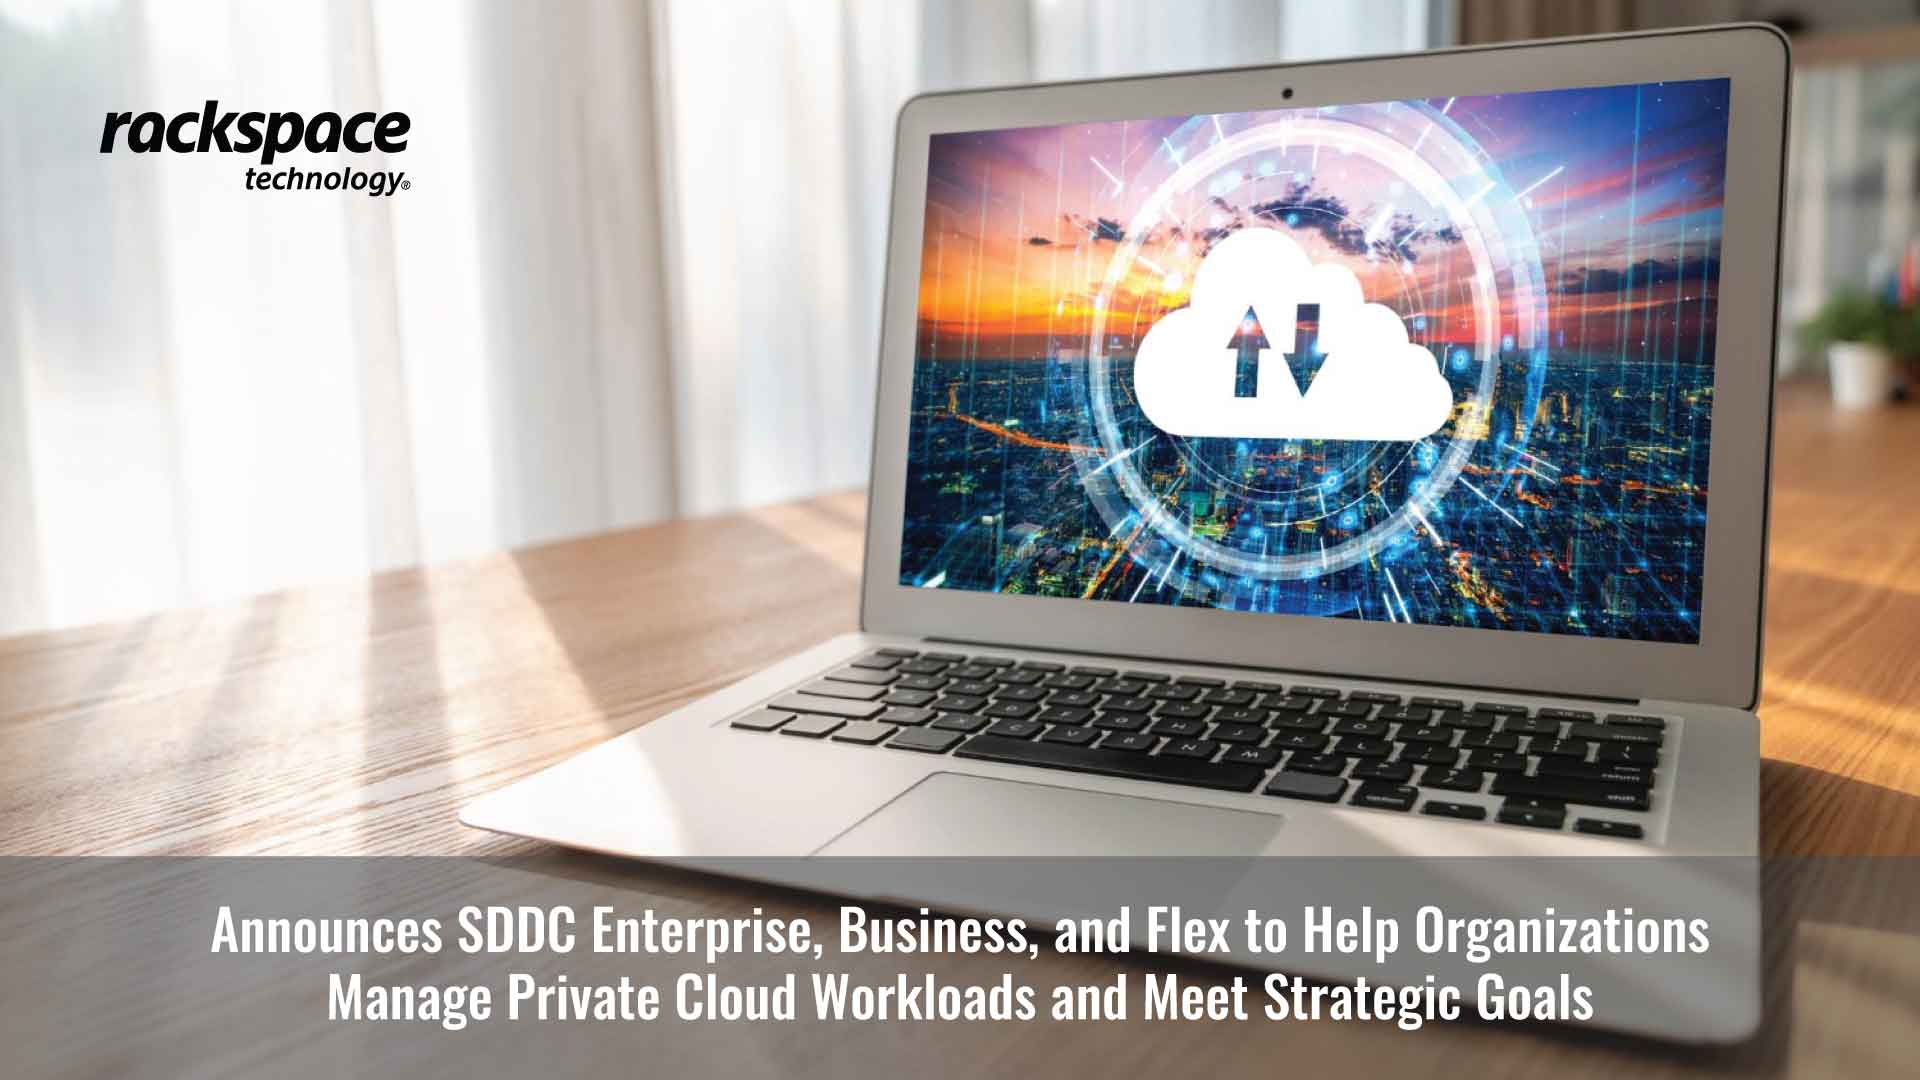 Rackspace Technology Announces SDDC Enterprise, Business, and Flex to Help Organizations Manage Private Cloud Workloads and Meet Strategic Goals